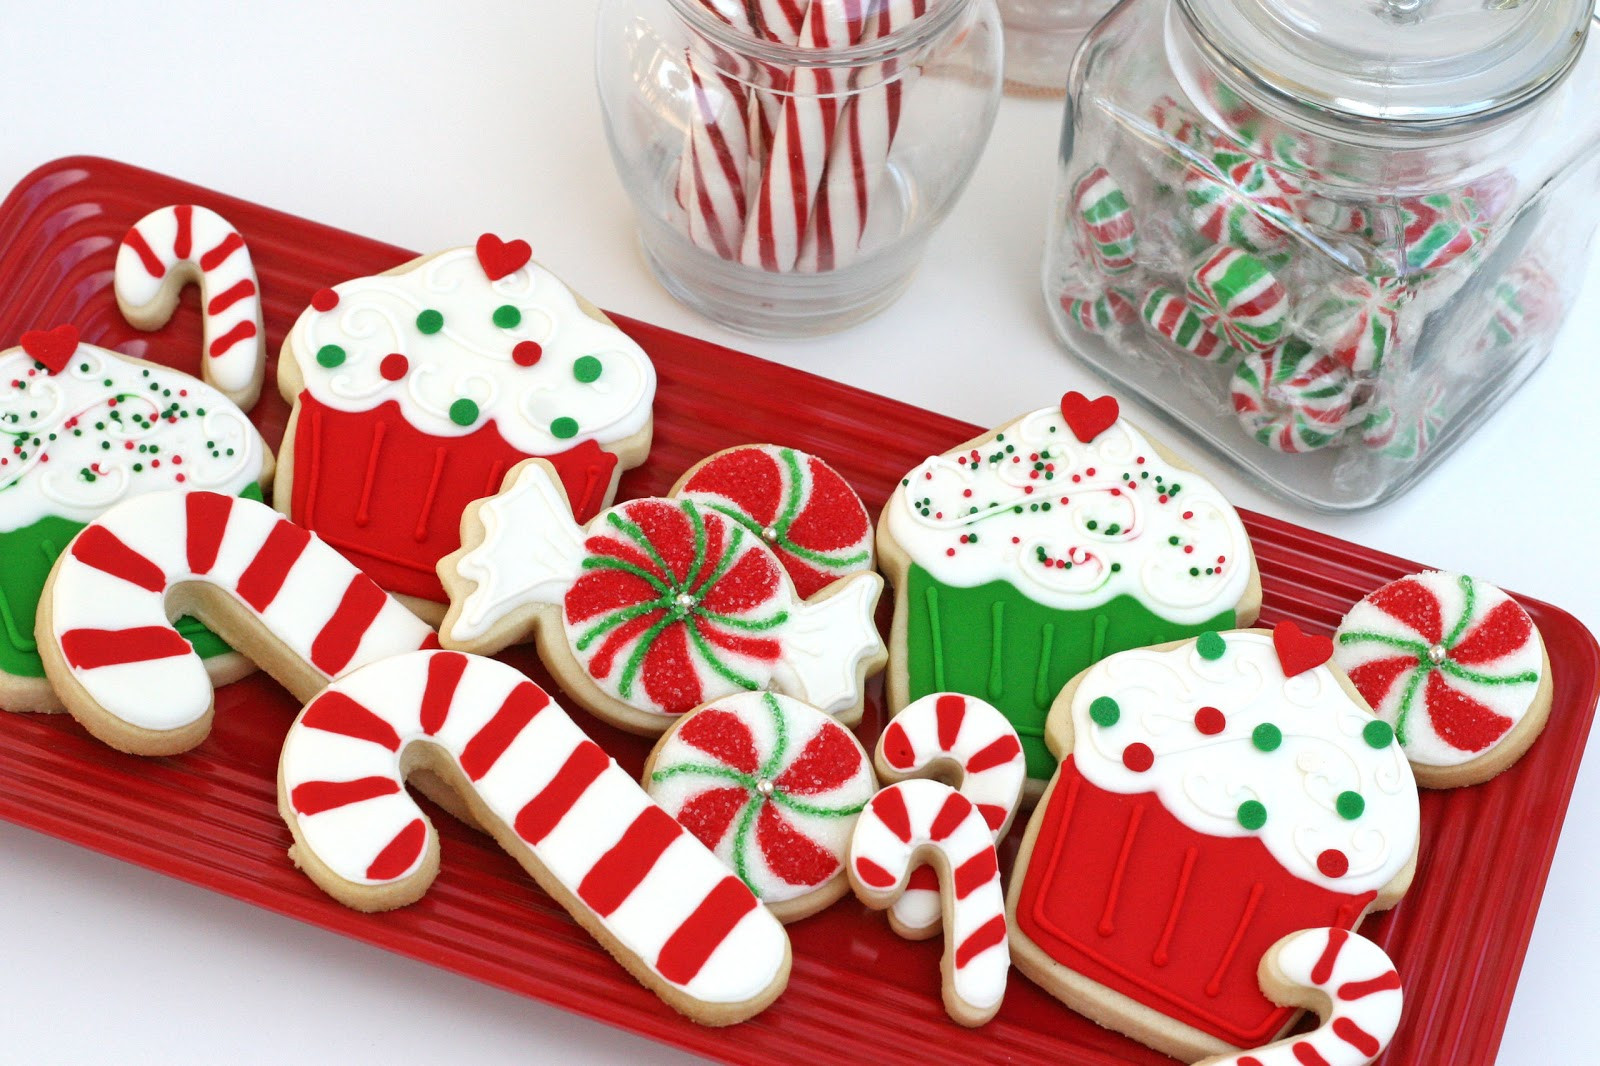 Decorated Christmas Sugar Cookies
 Christmas Cookies Galore Glorious Treats